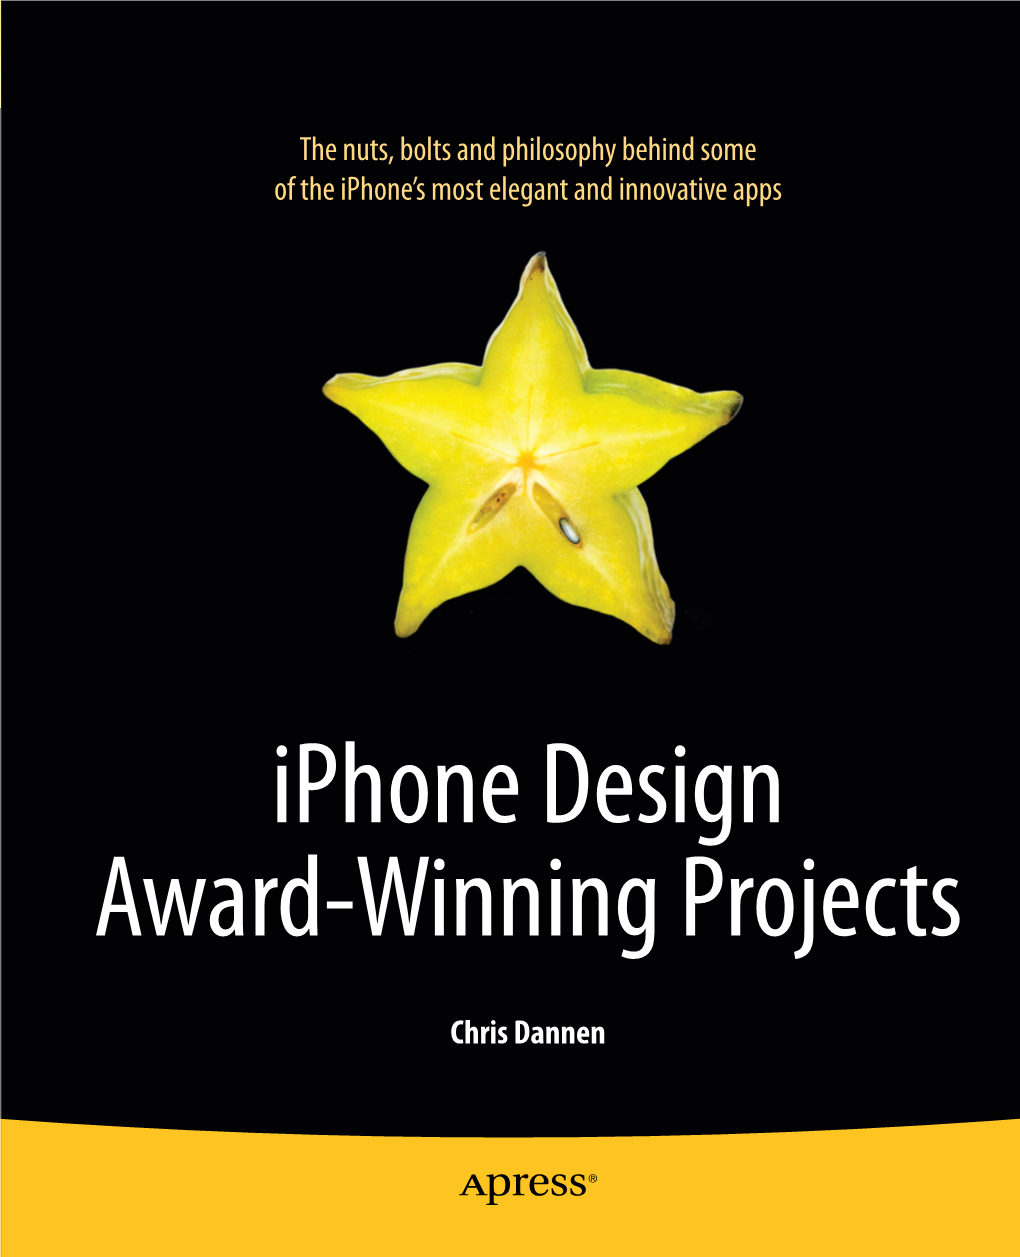 Iphone Design Award-Winning Projects 9 9 9 5 3